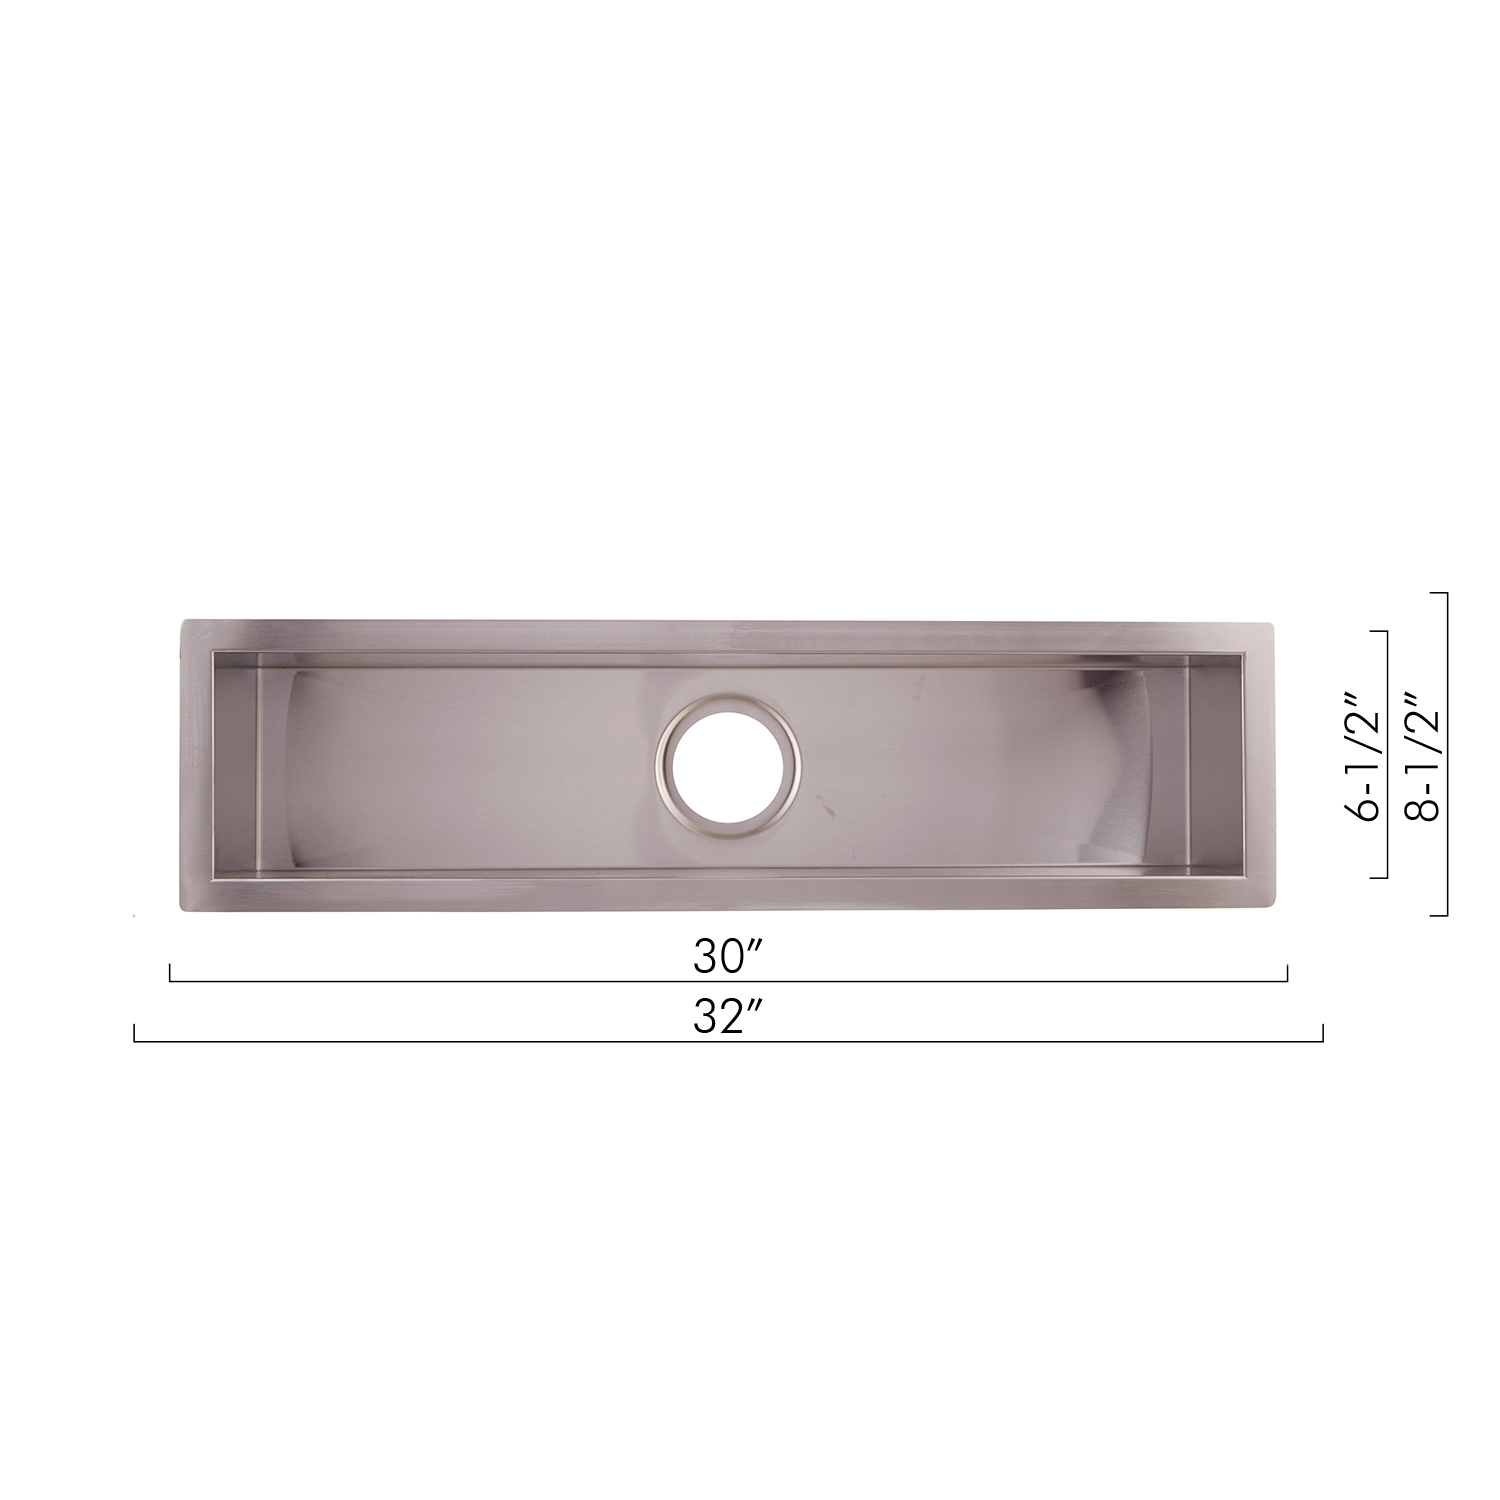 DAX Handmade Undermount Bar Sink, 16 Gauge Stainless Steel, Brushed Finish, 32 x 8-1/2 x 6 Inches (DAX-SQ-3285)